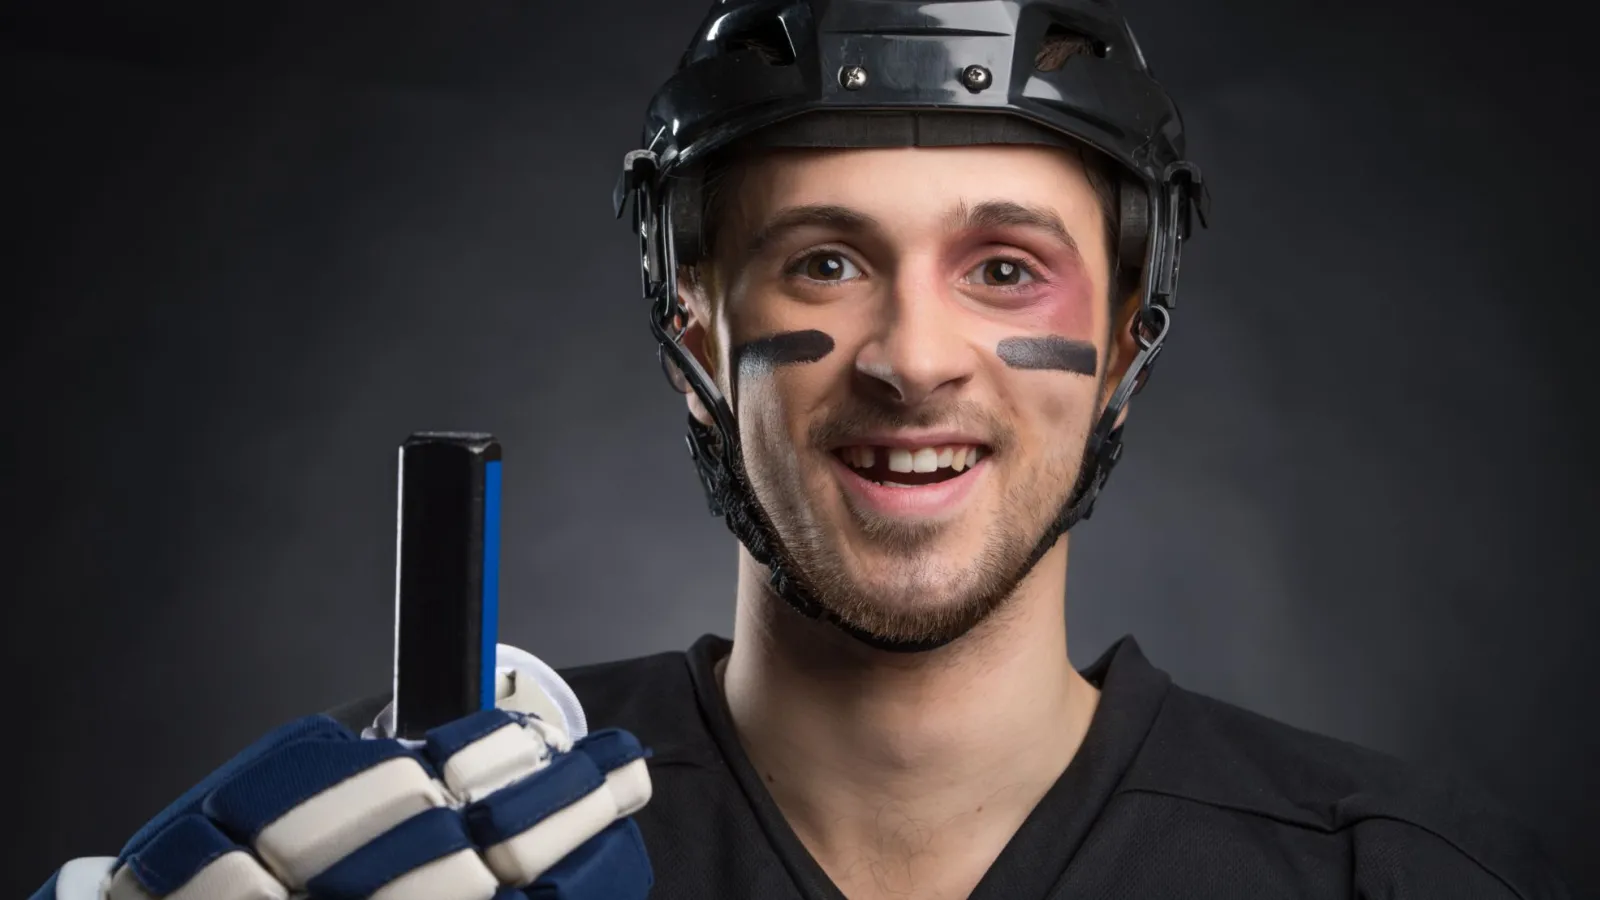 hockey player smiling holding a hockey stick